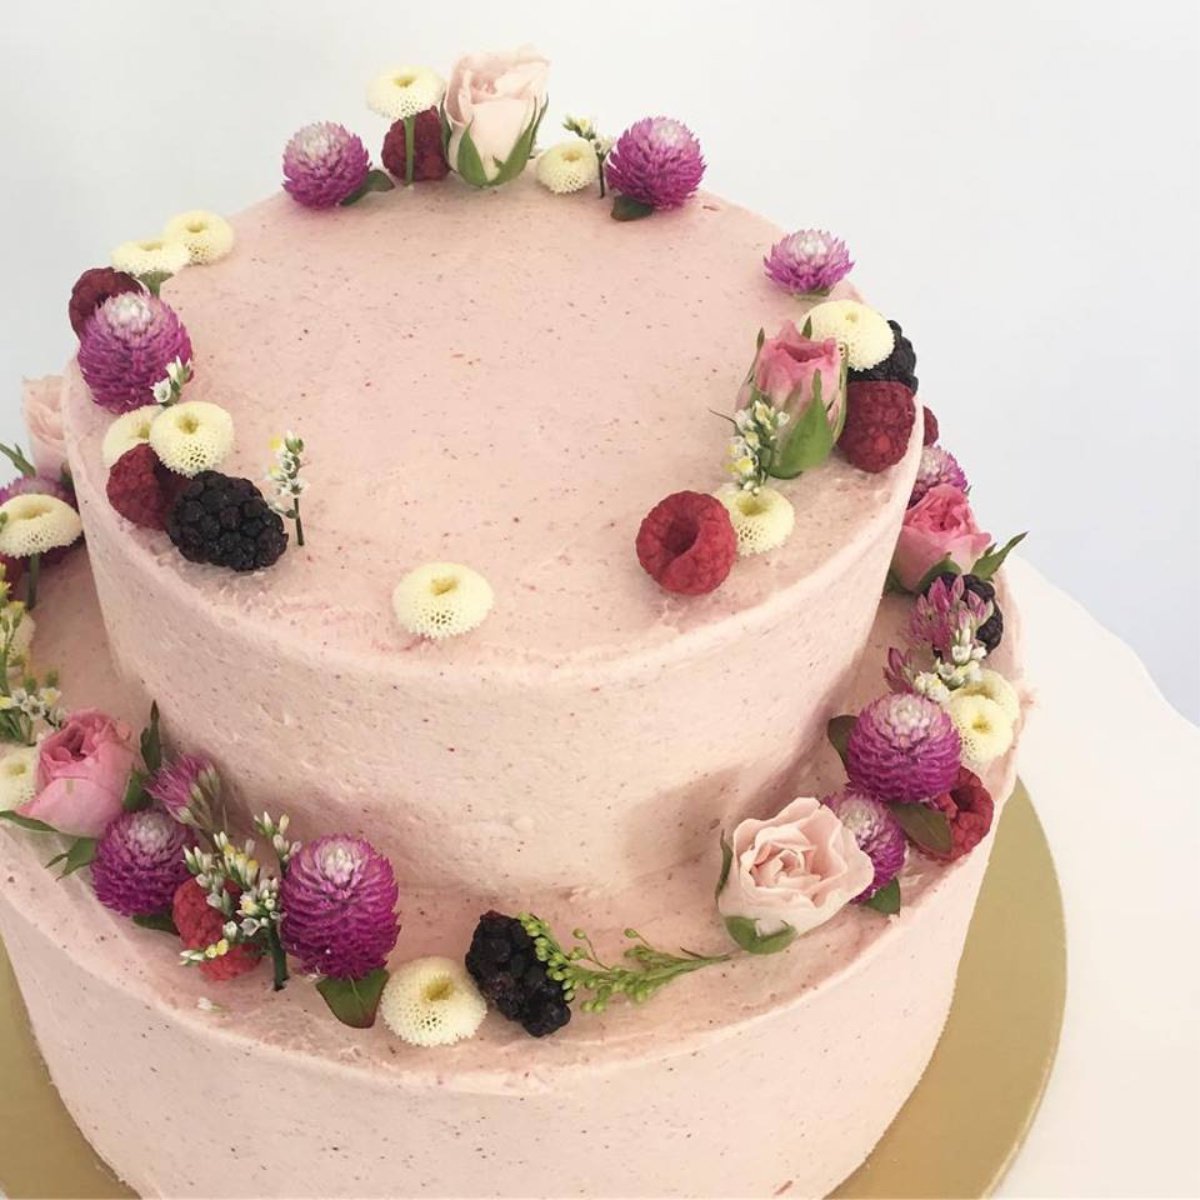 The Caker wedding cake